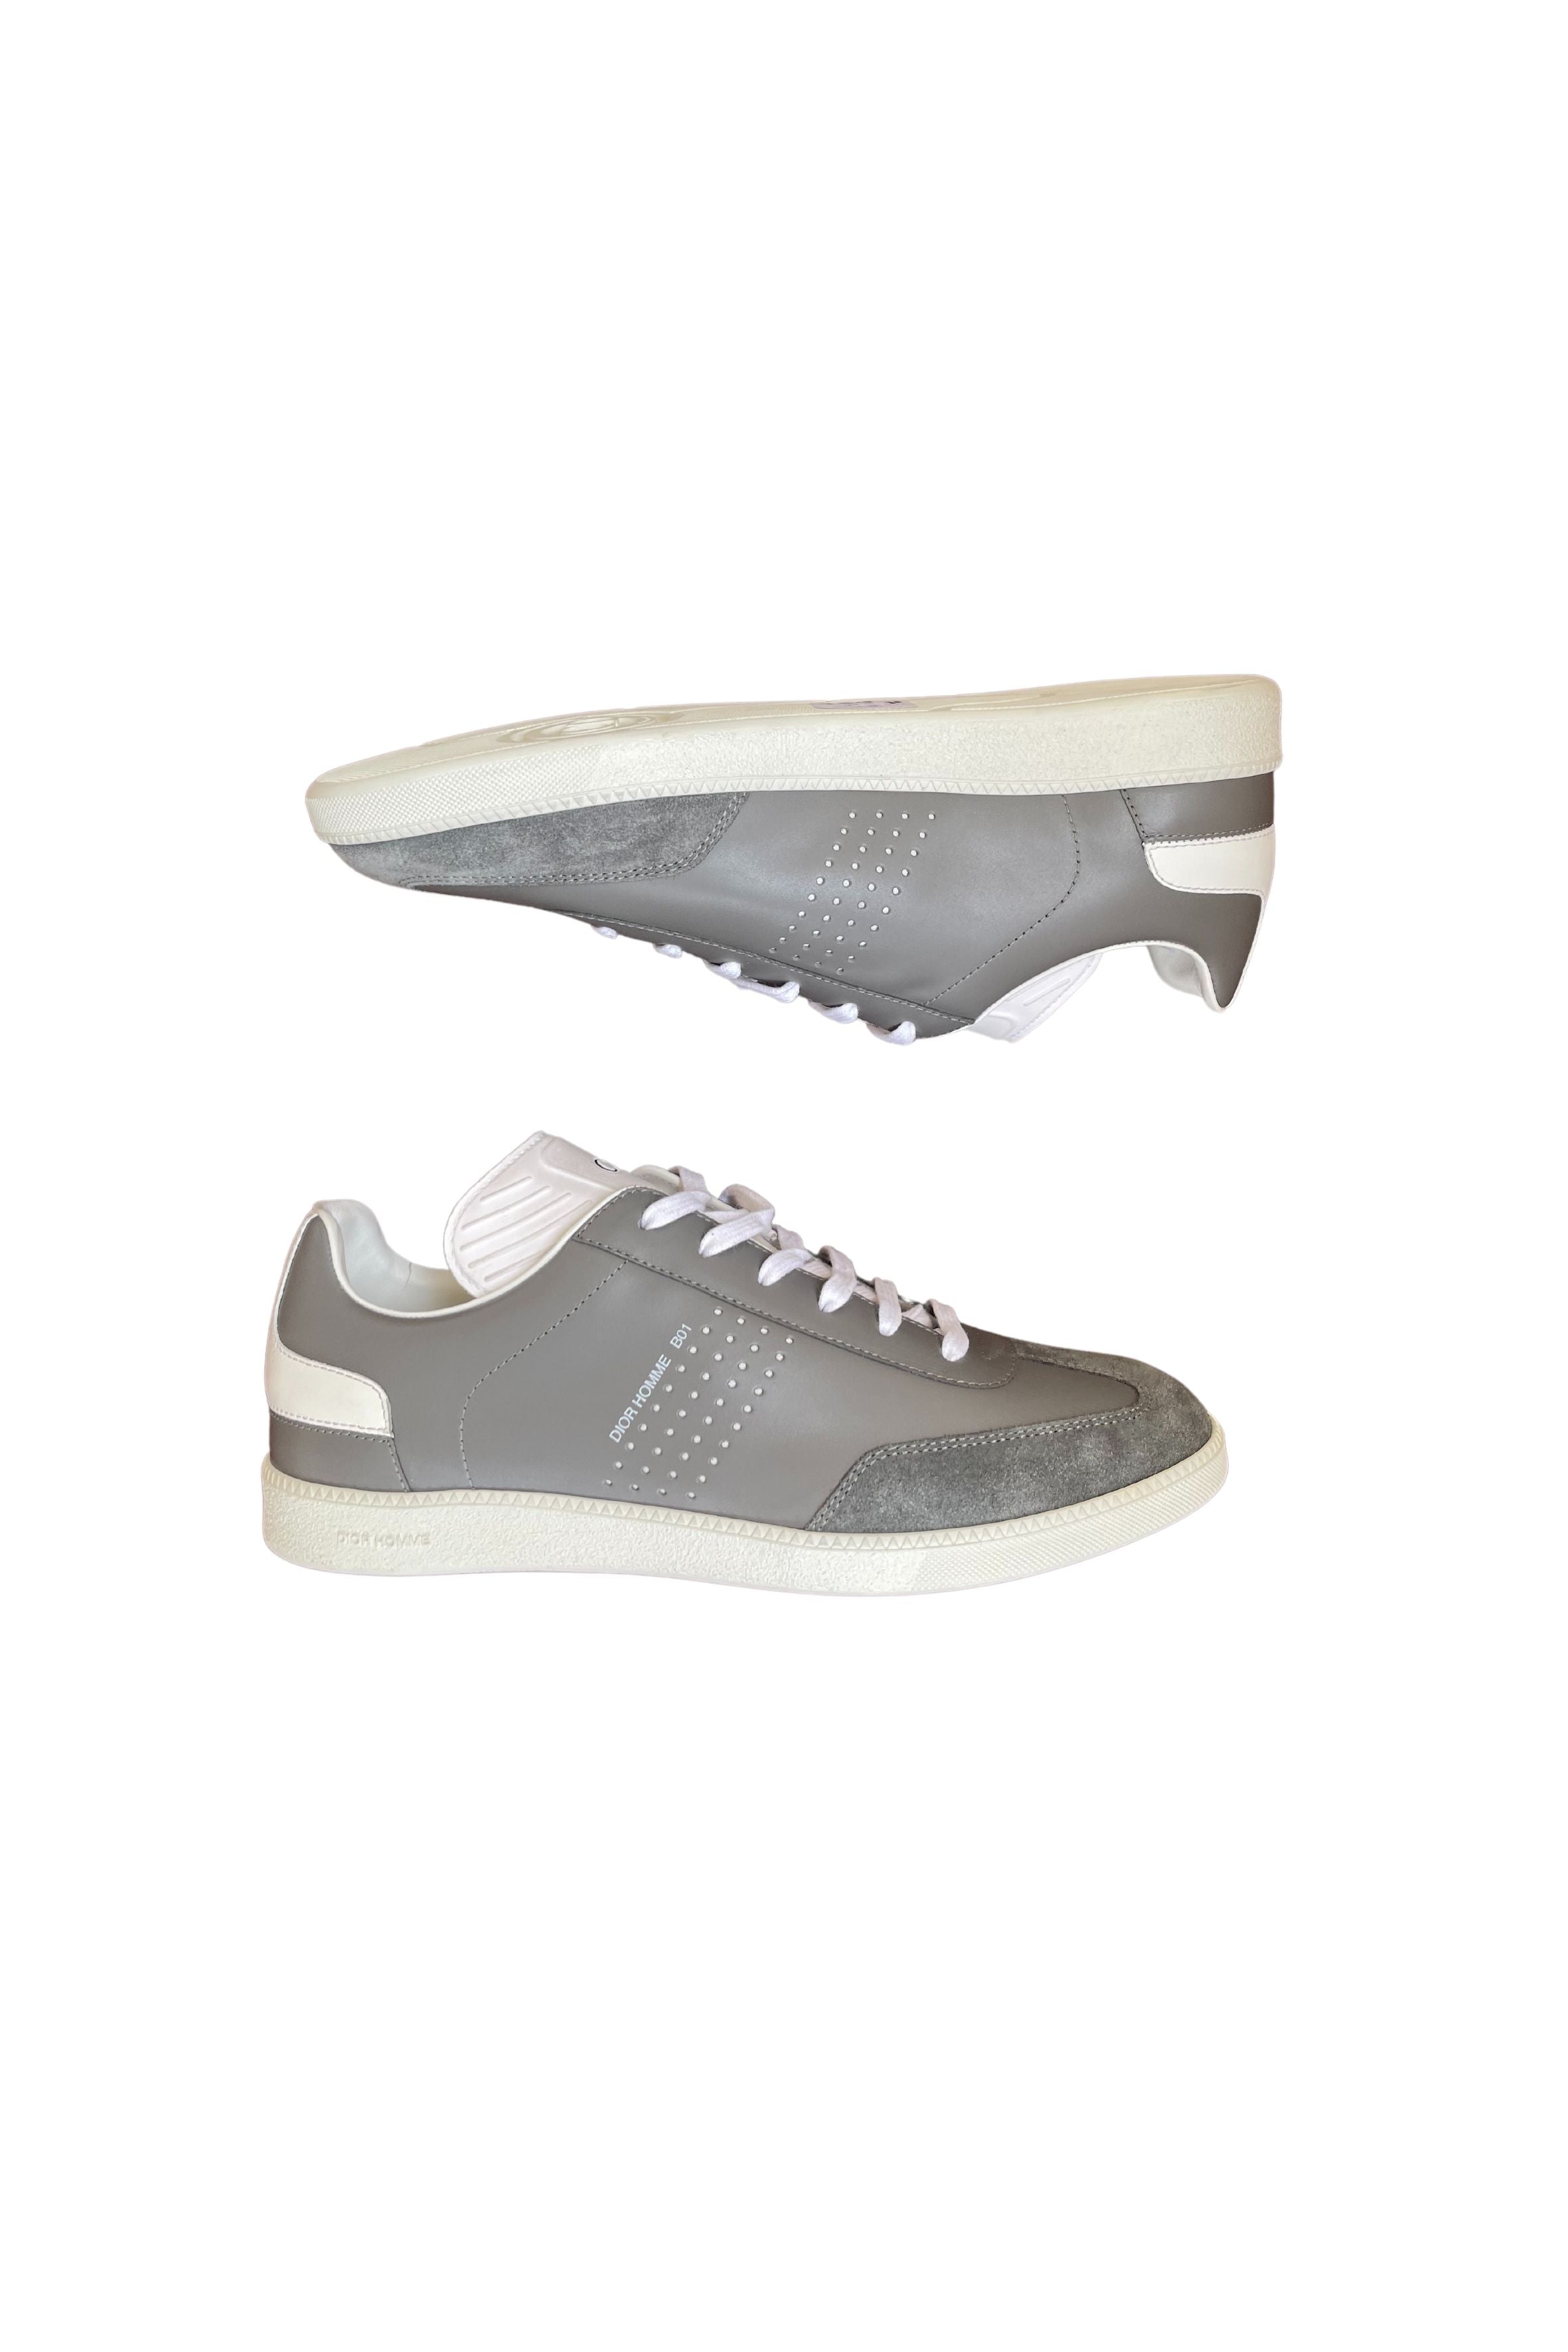 Dior B01 Grey Sneaker Size 40